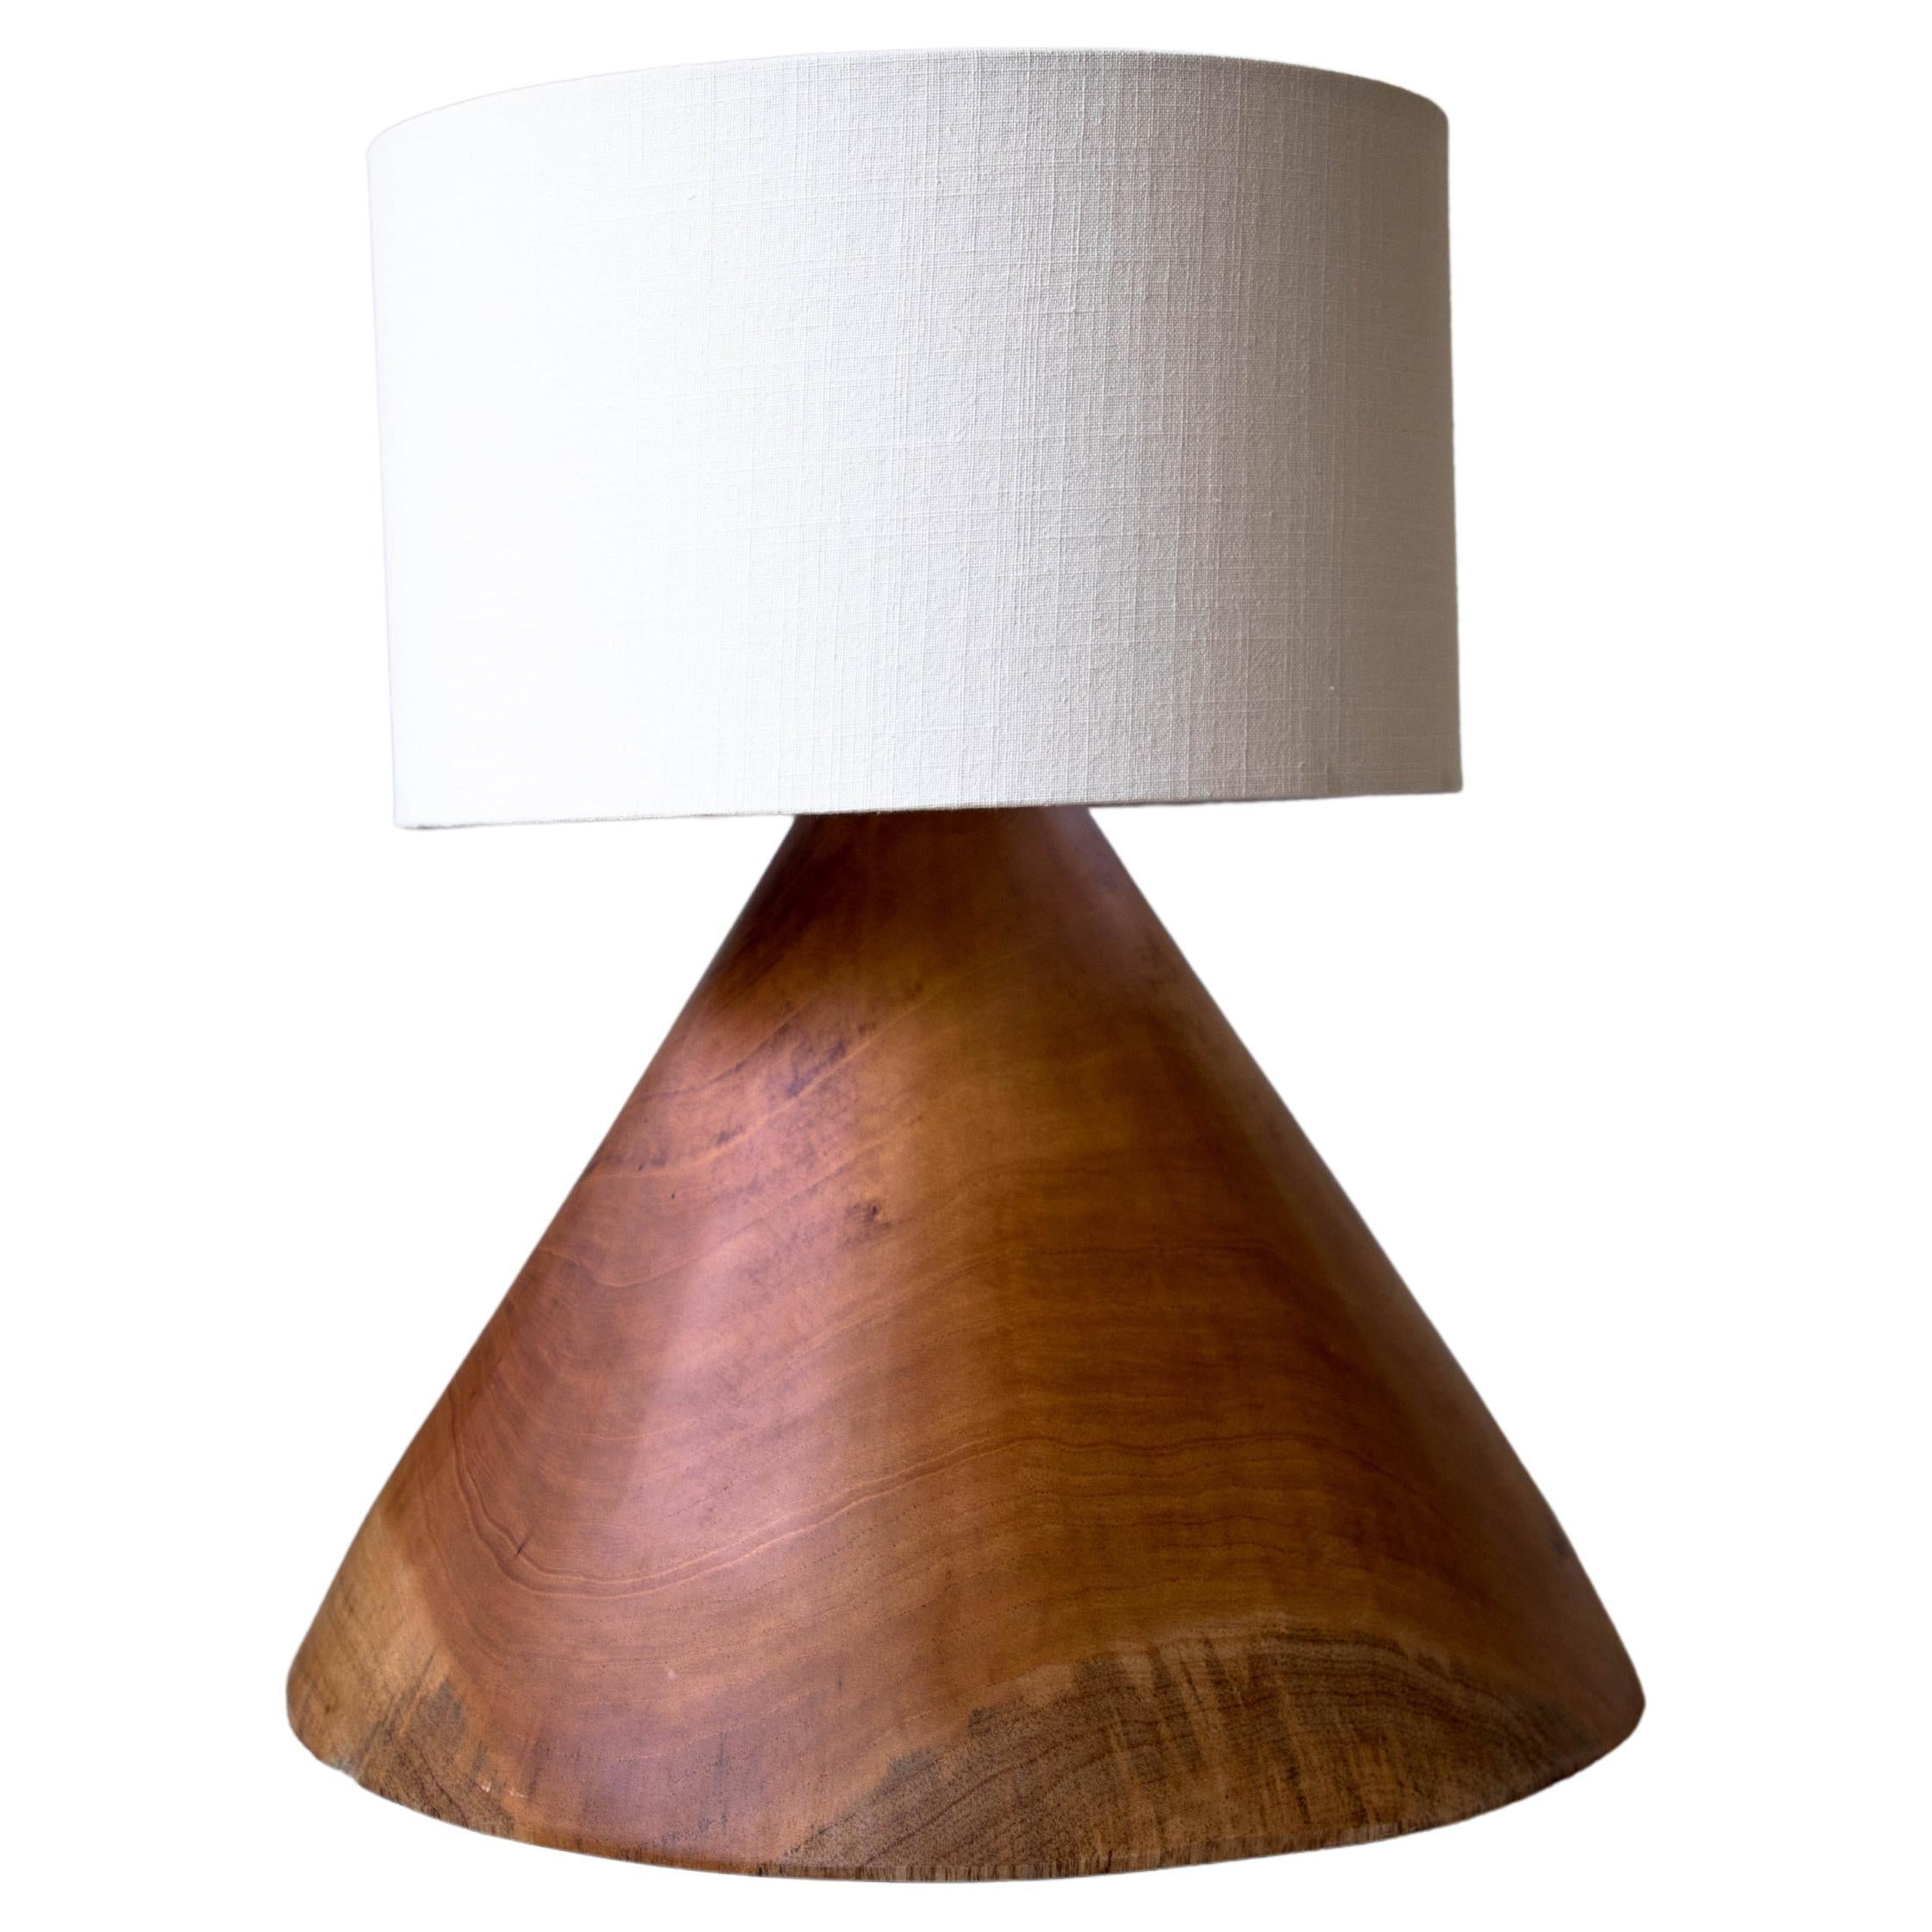 Original 08 Cone Table Lamp with Linen Screen by Daniel Orozco